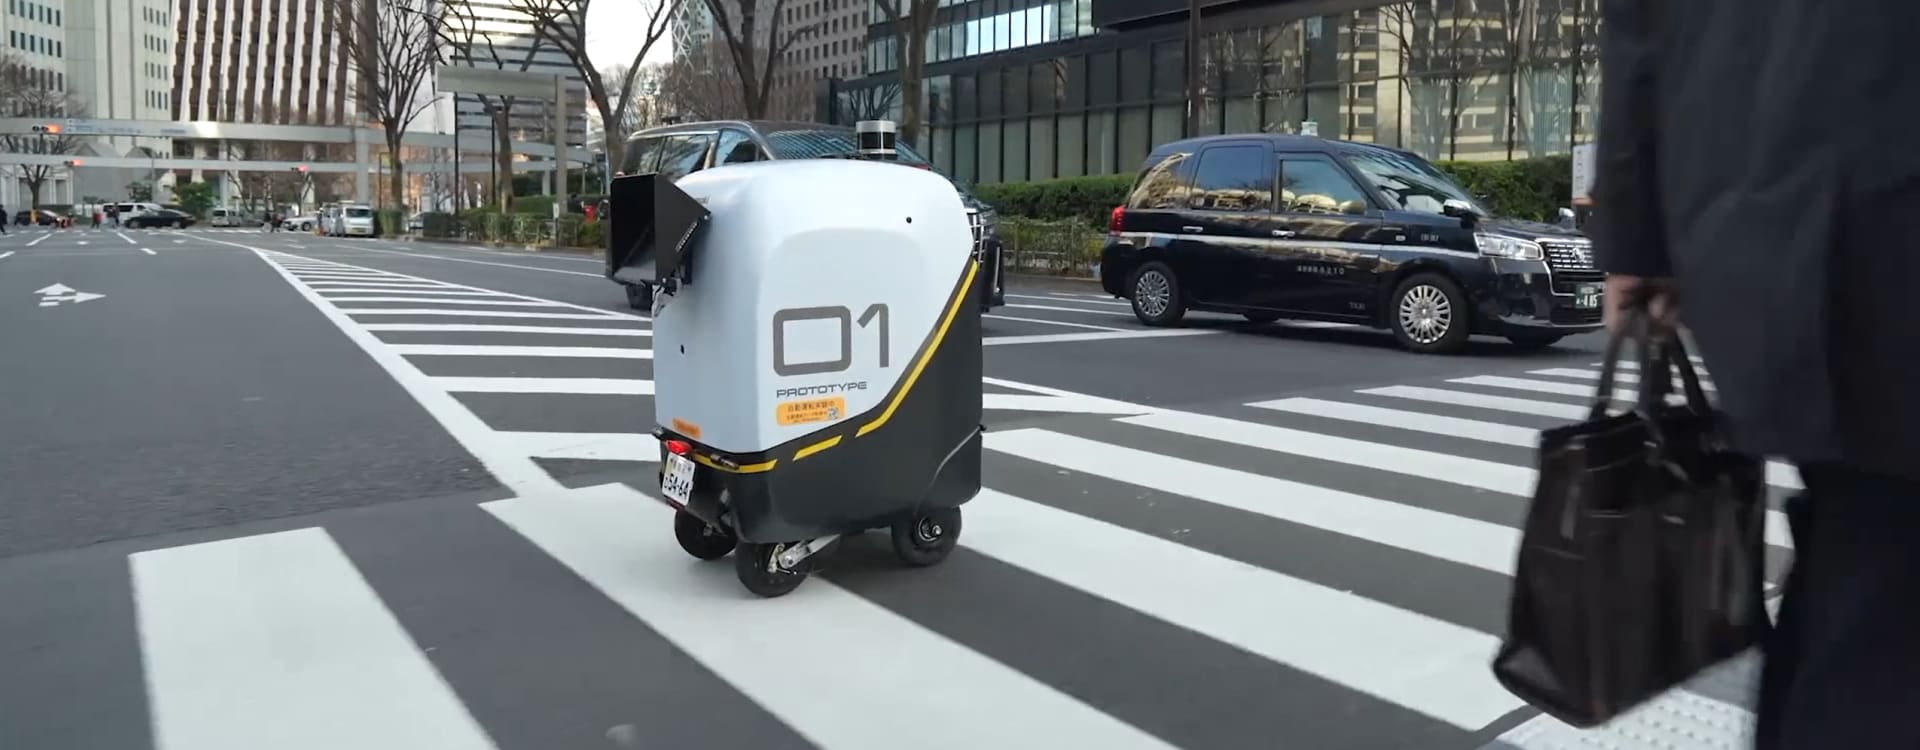 Robot crossing the street